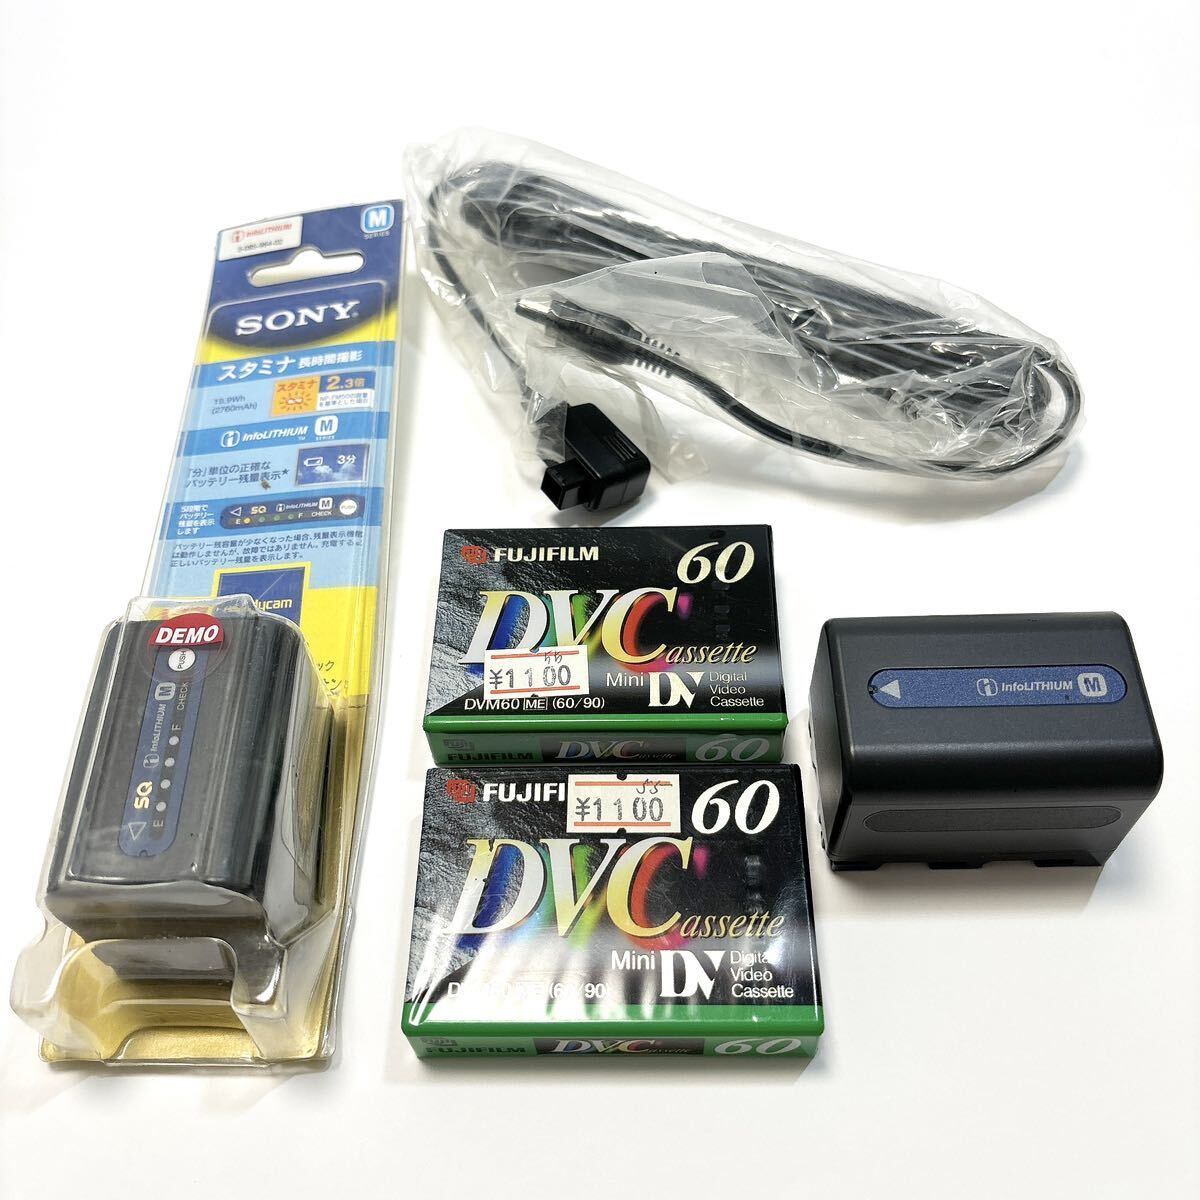 SONY Sony Handycam DCR-TRV20 цифровая видео камера Mini DV miniDV alp скала 0413